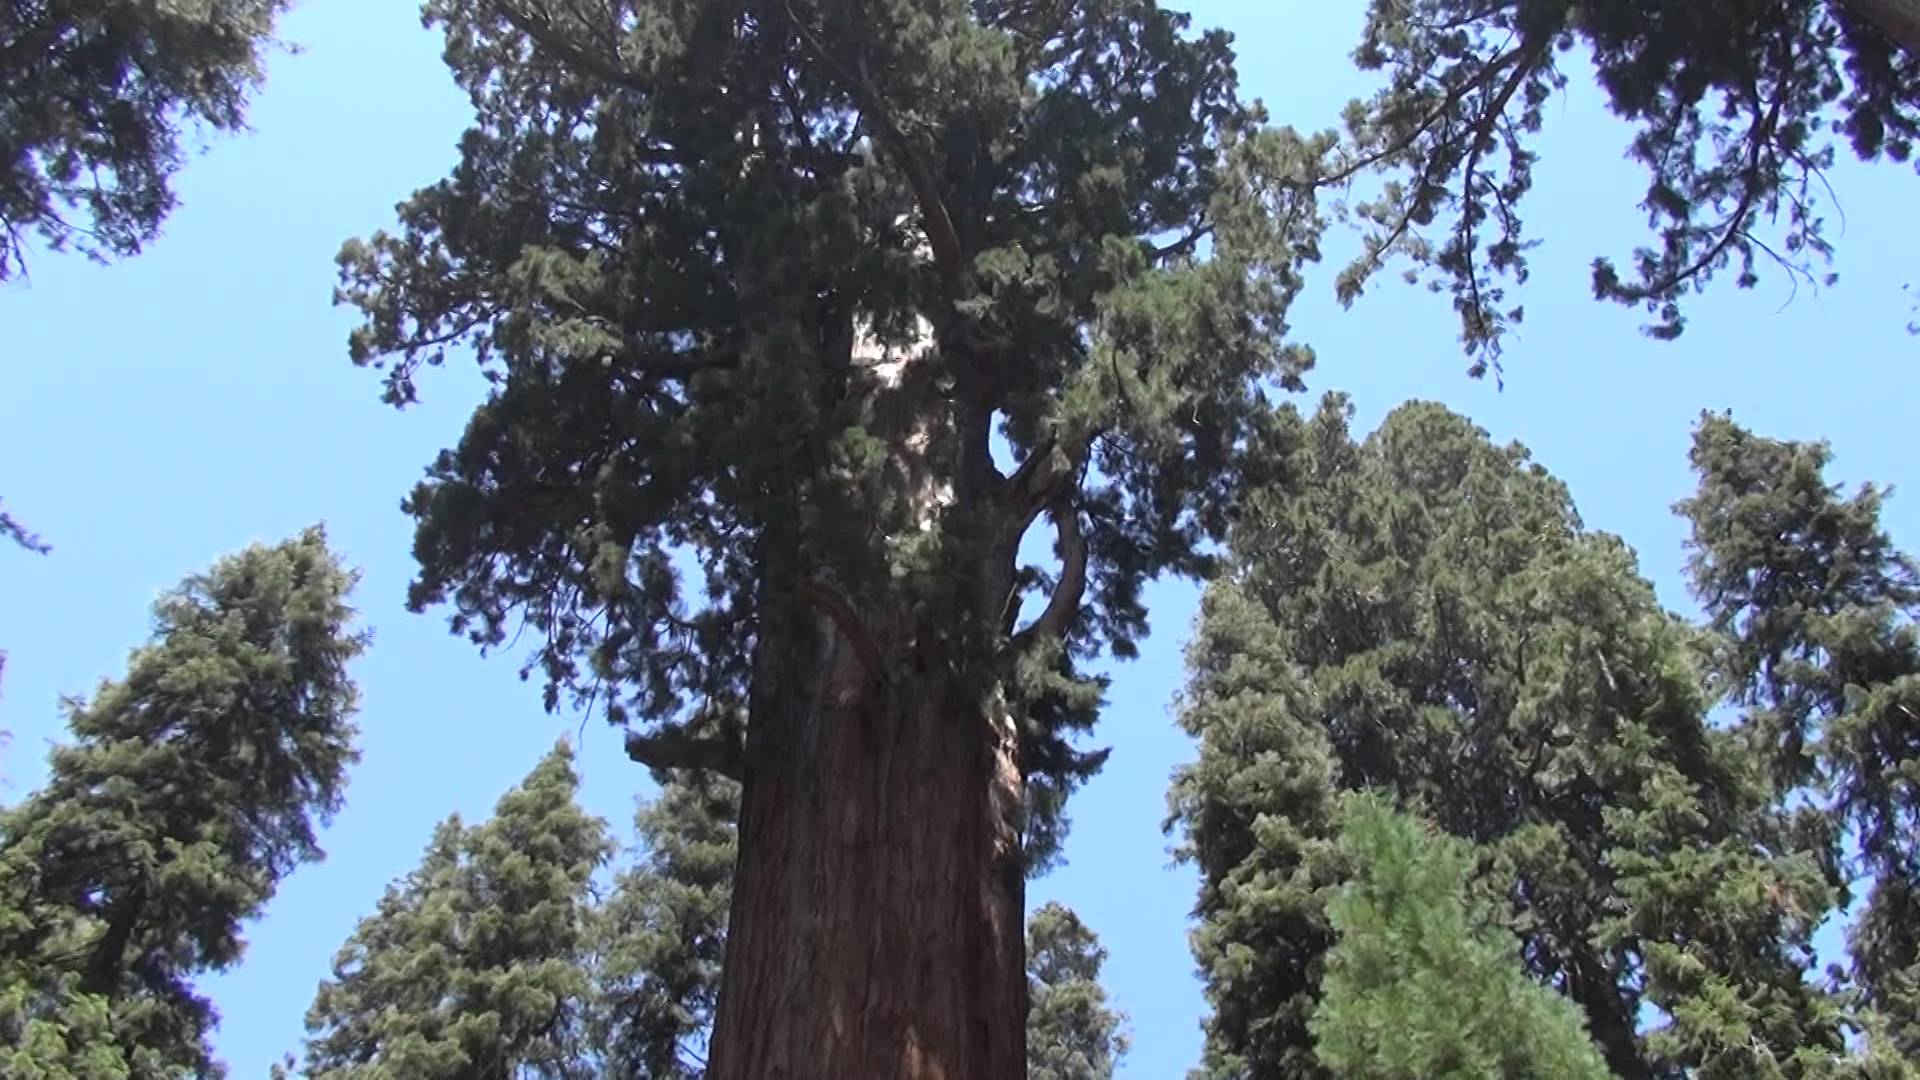 General Sherman Tree trail, Sequoia National Park, USA